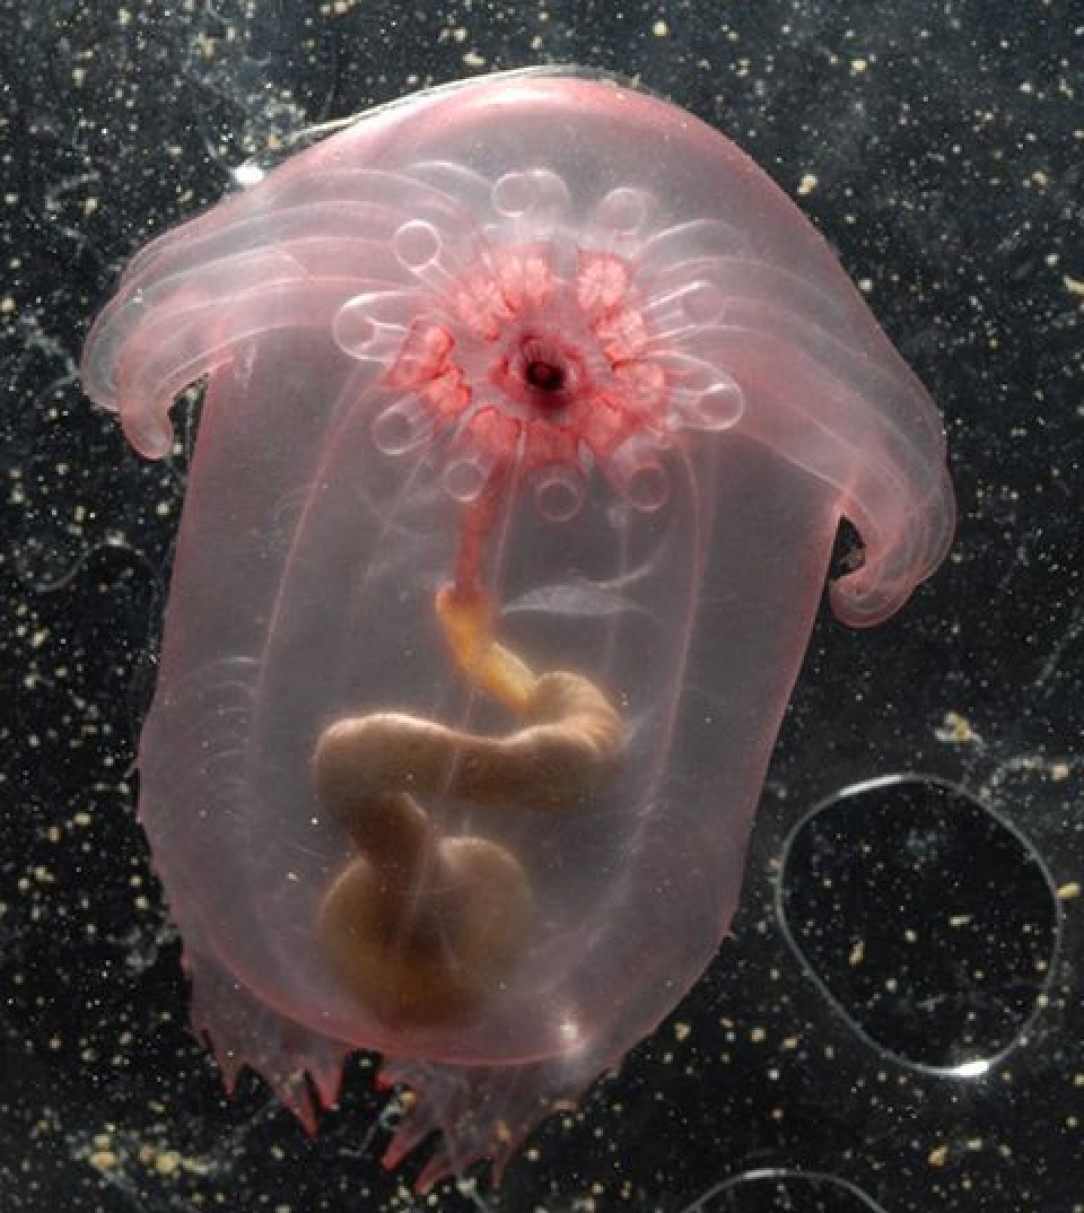 The pink see-through fantasia sea cucumber